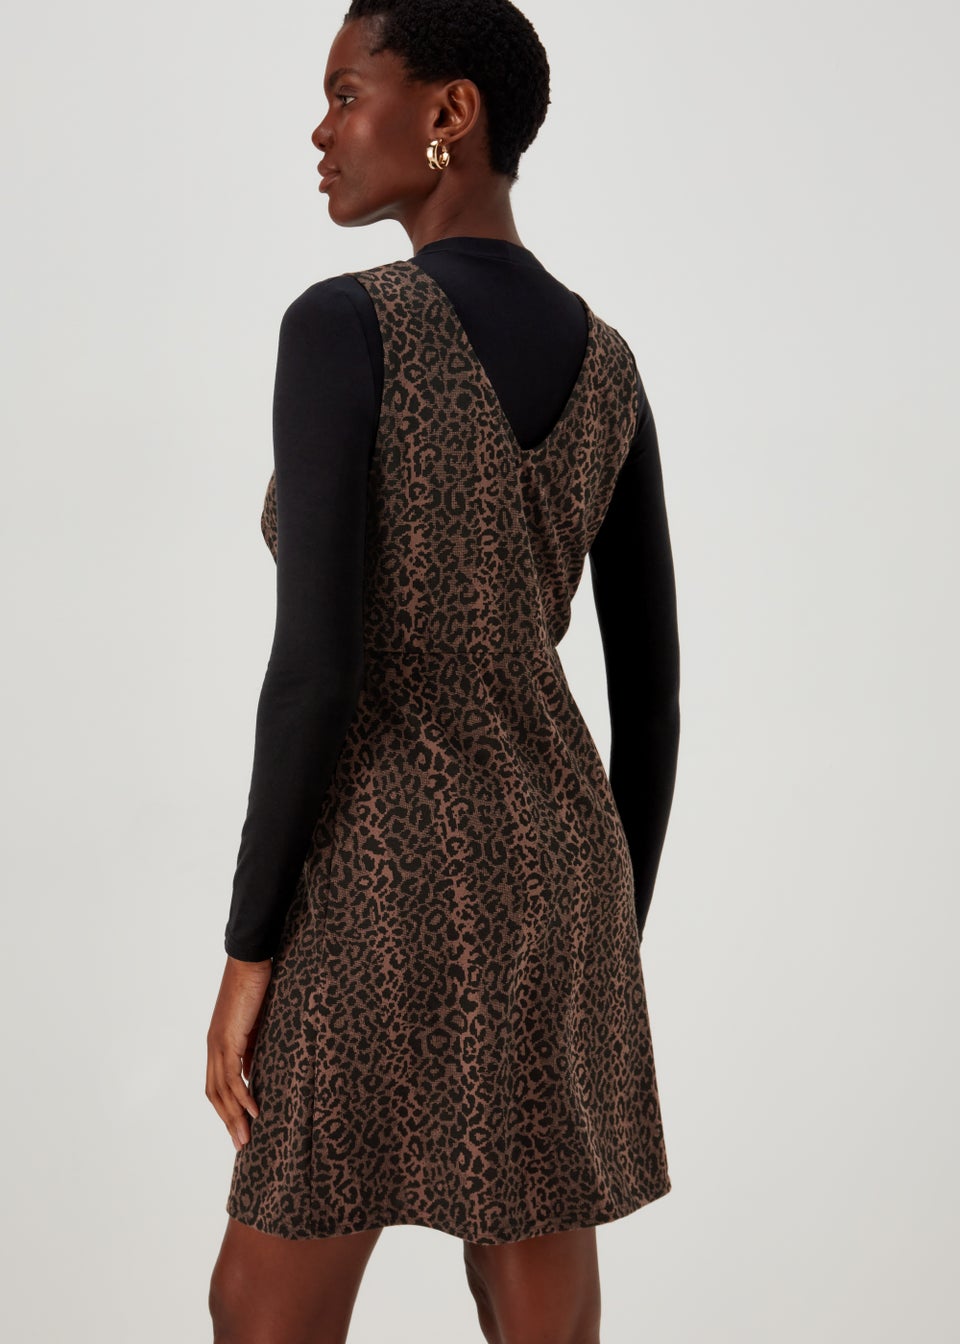 Black Leopard Print Pinafore Dress